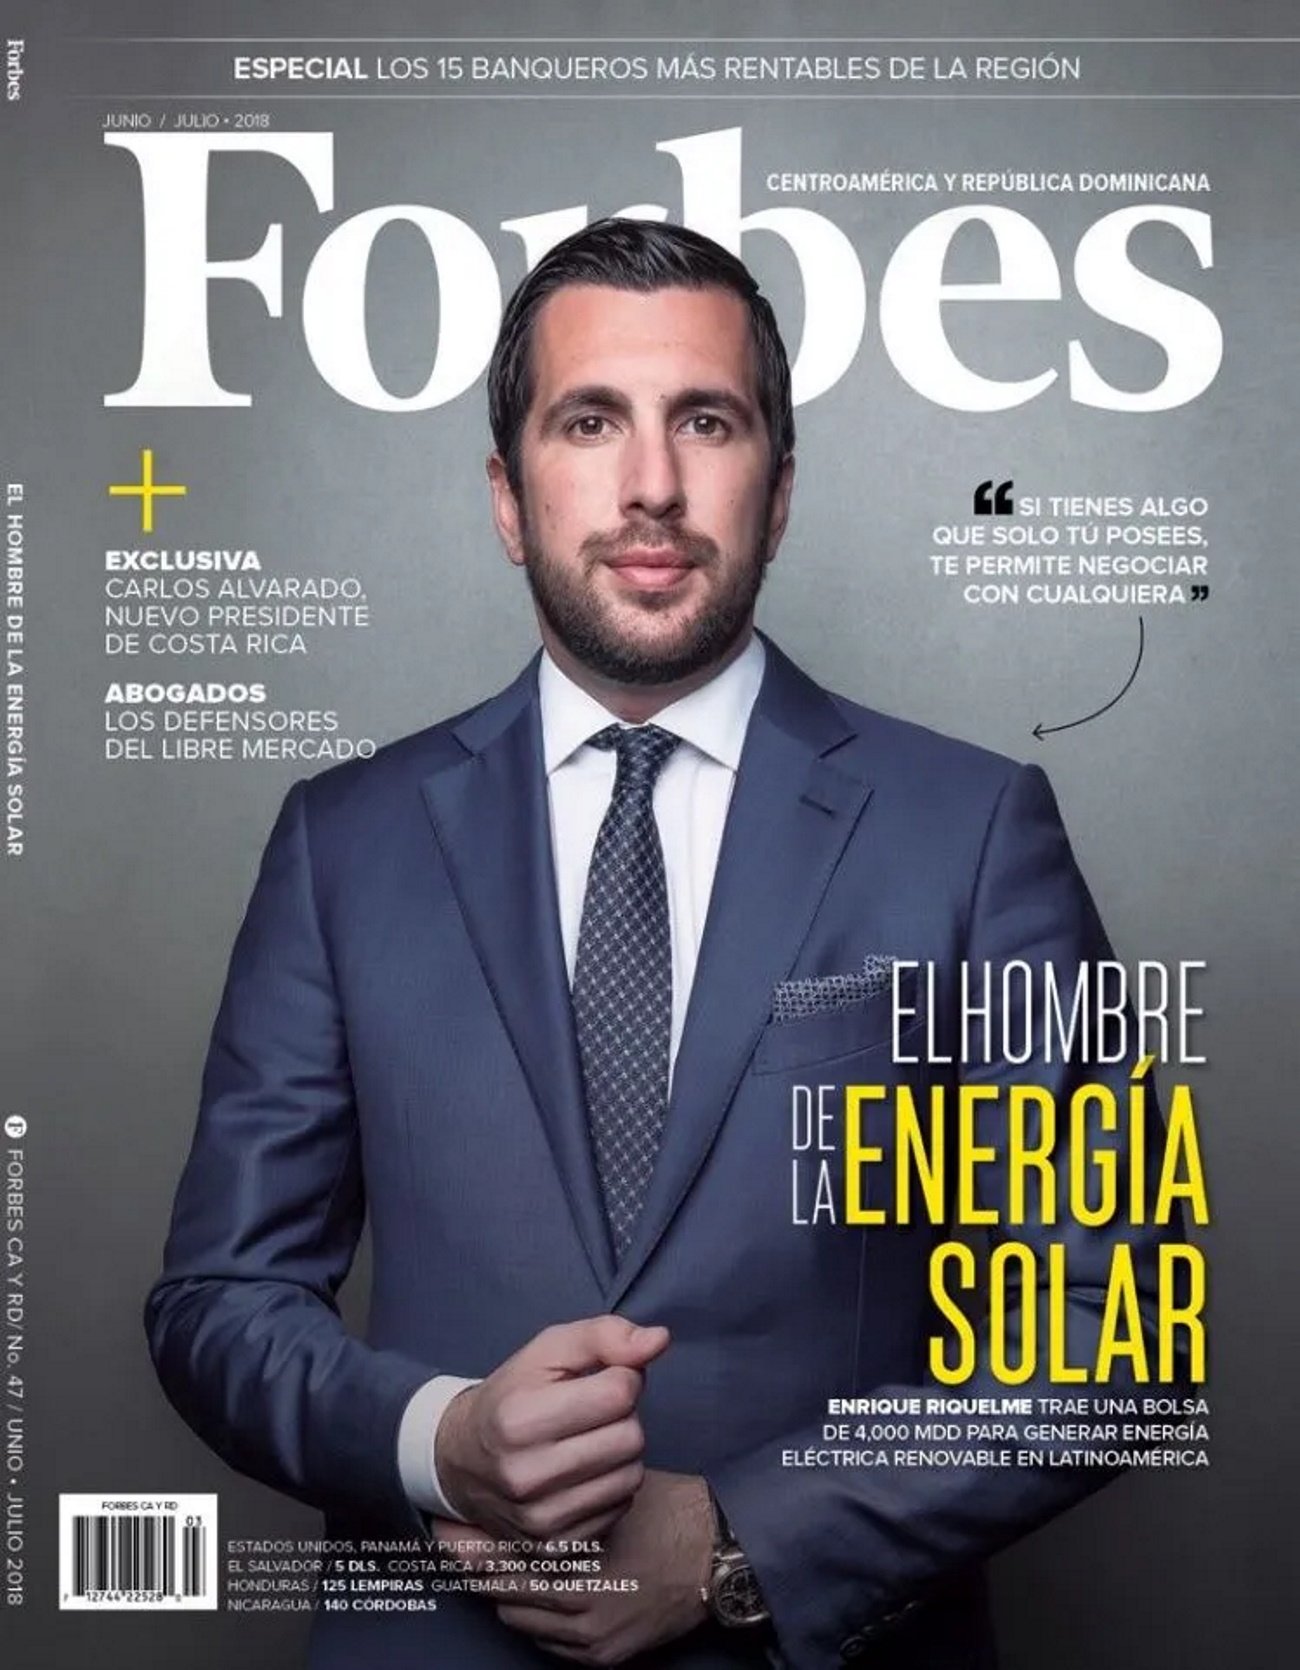 Enrique Riquelme Forbes Centroamérica i República Dominicana